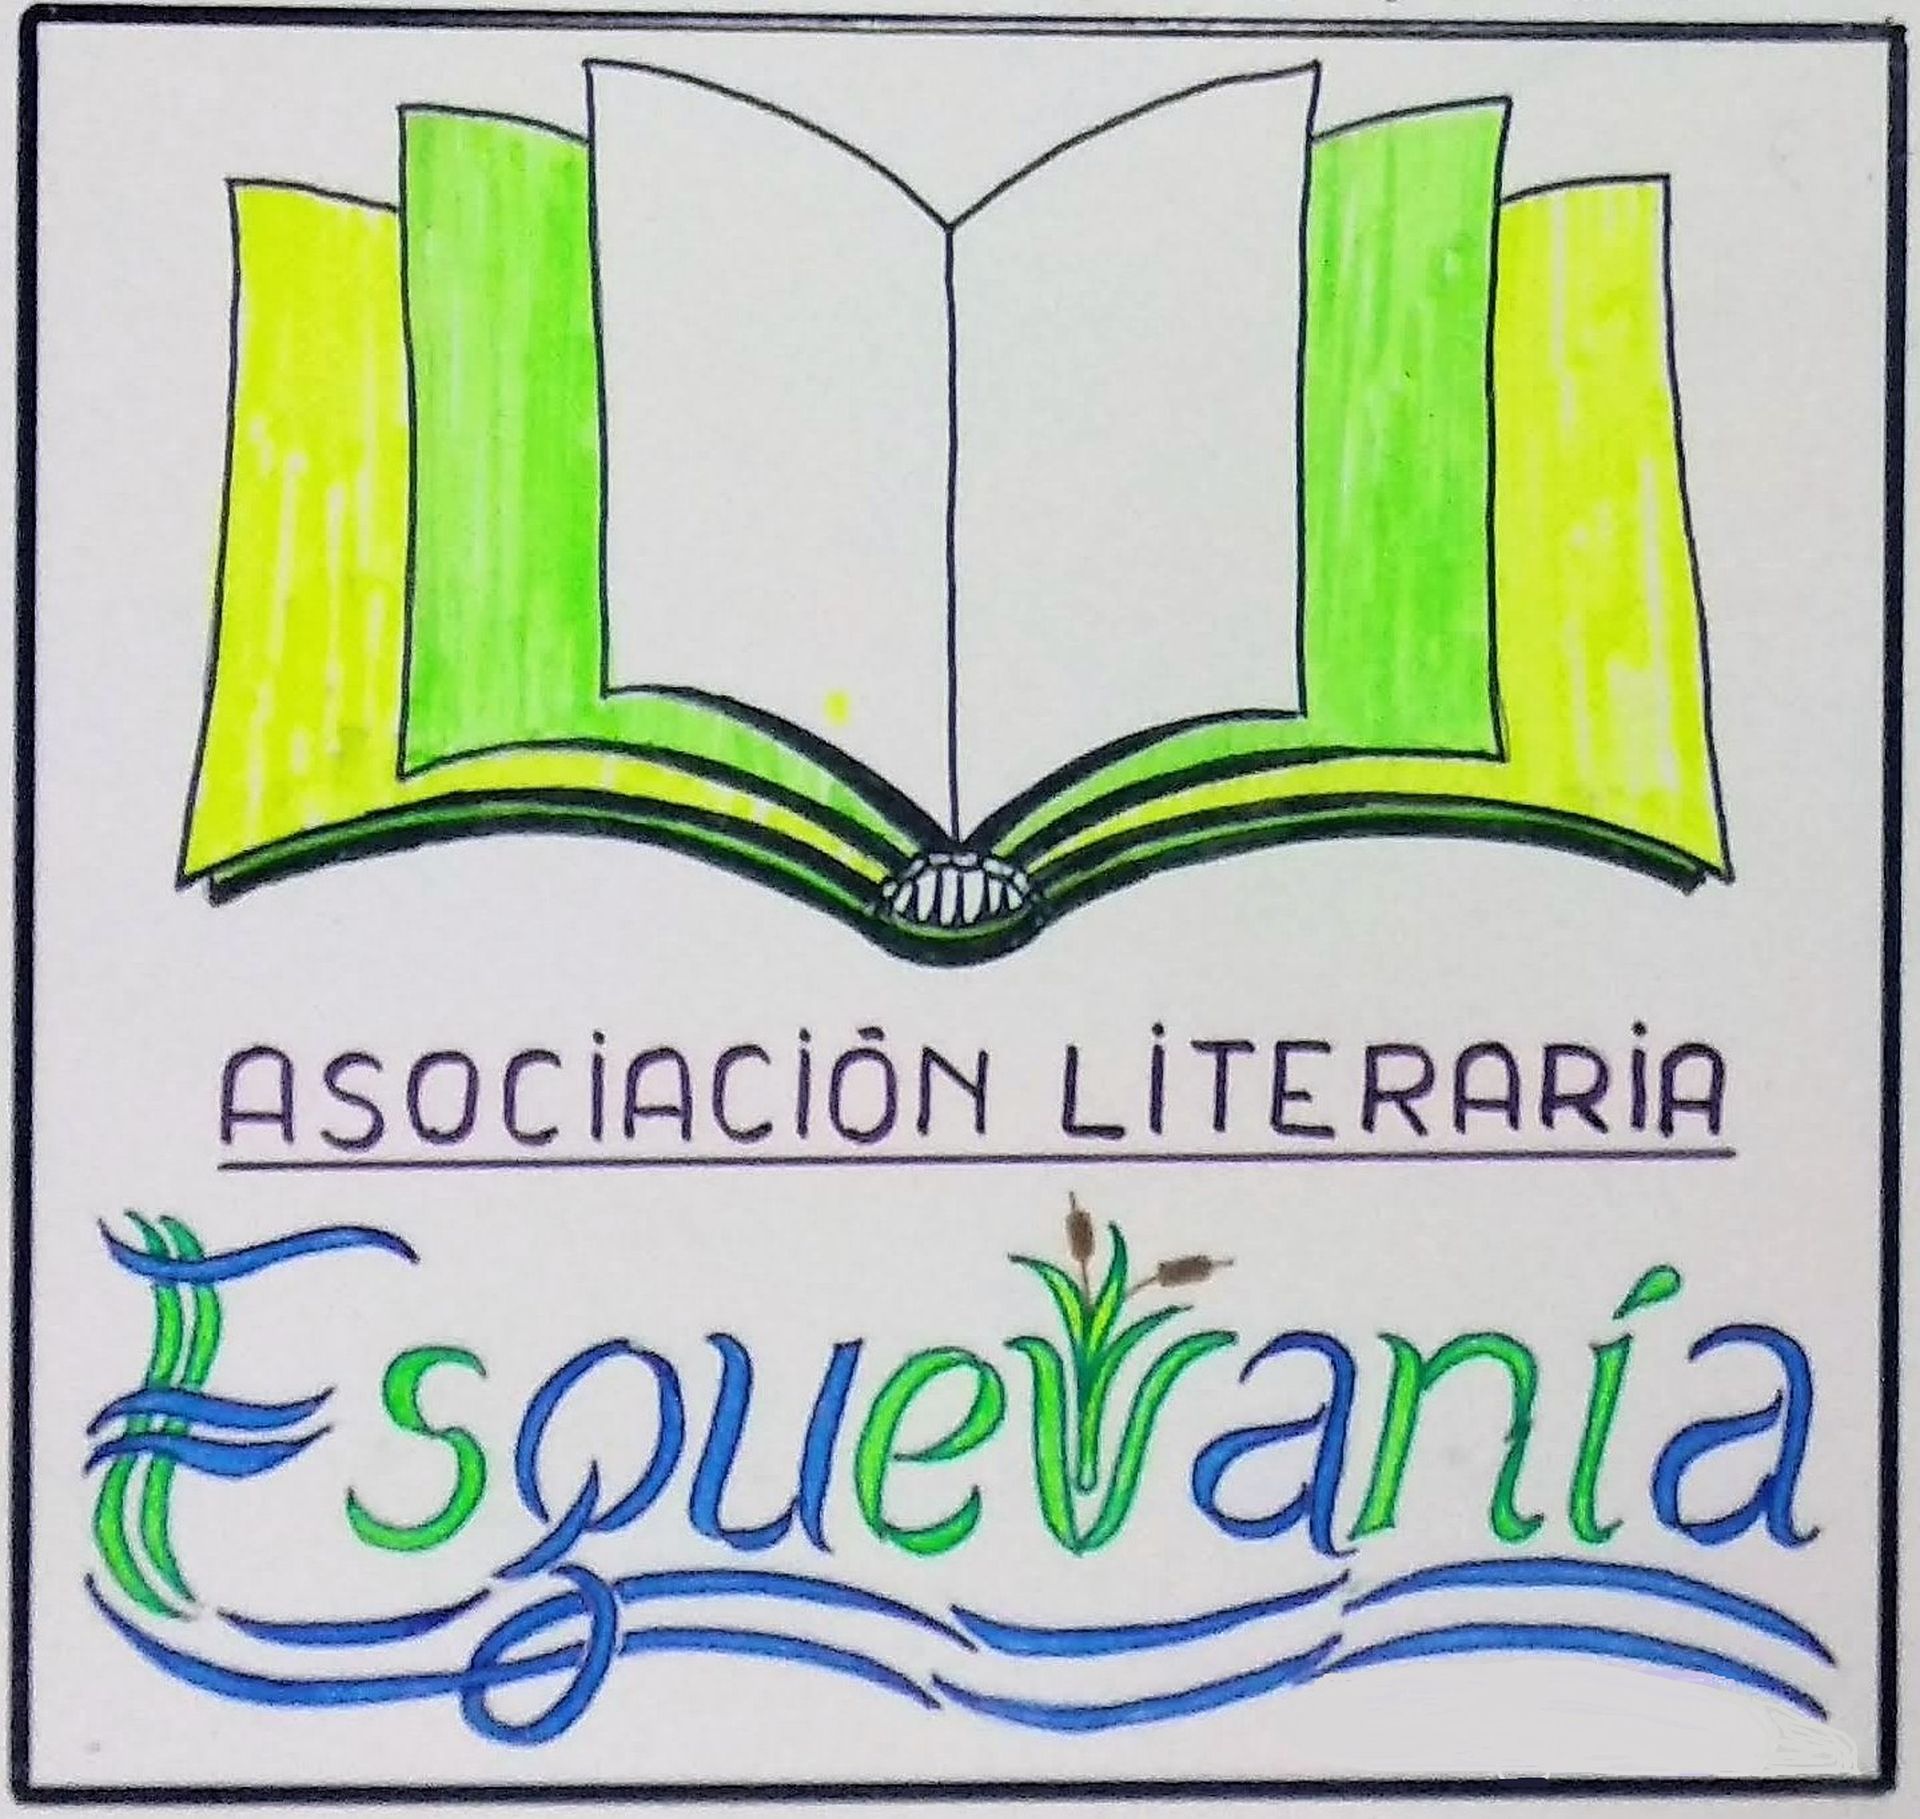 Asociación Literaria Esguevanía